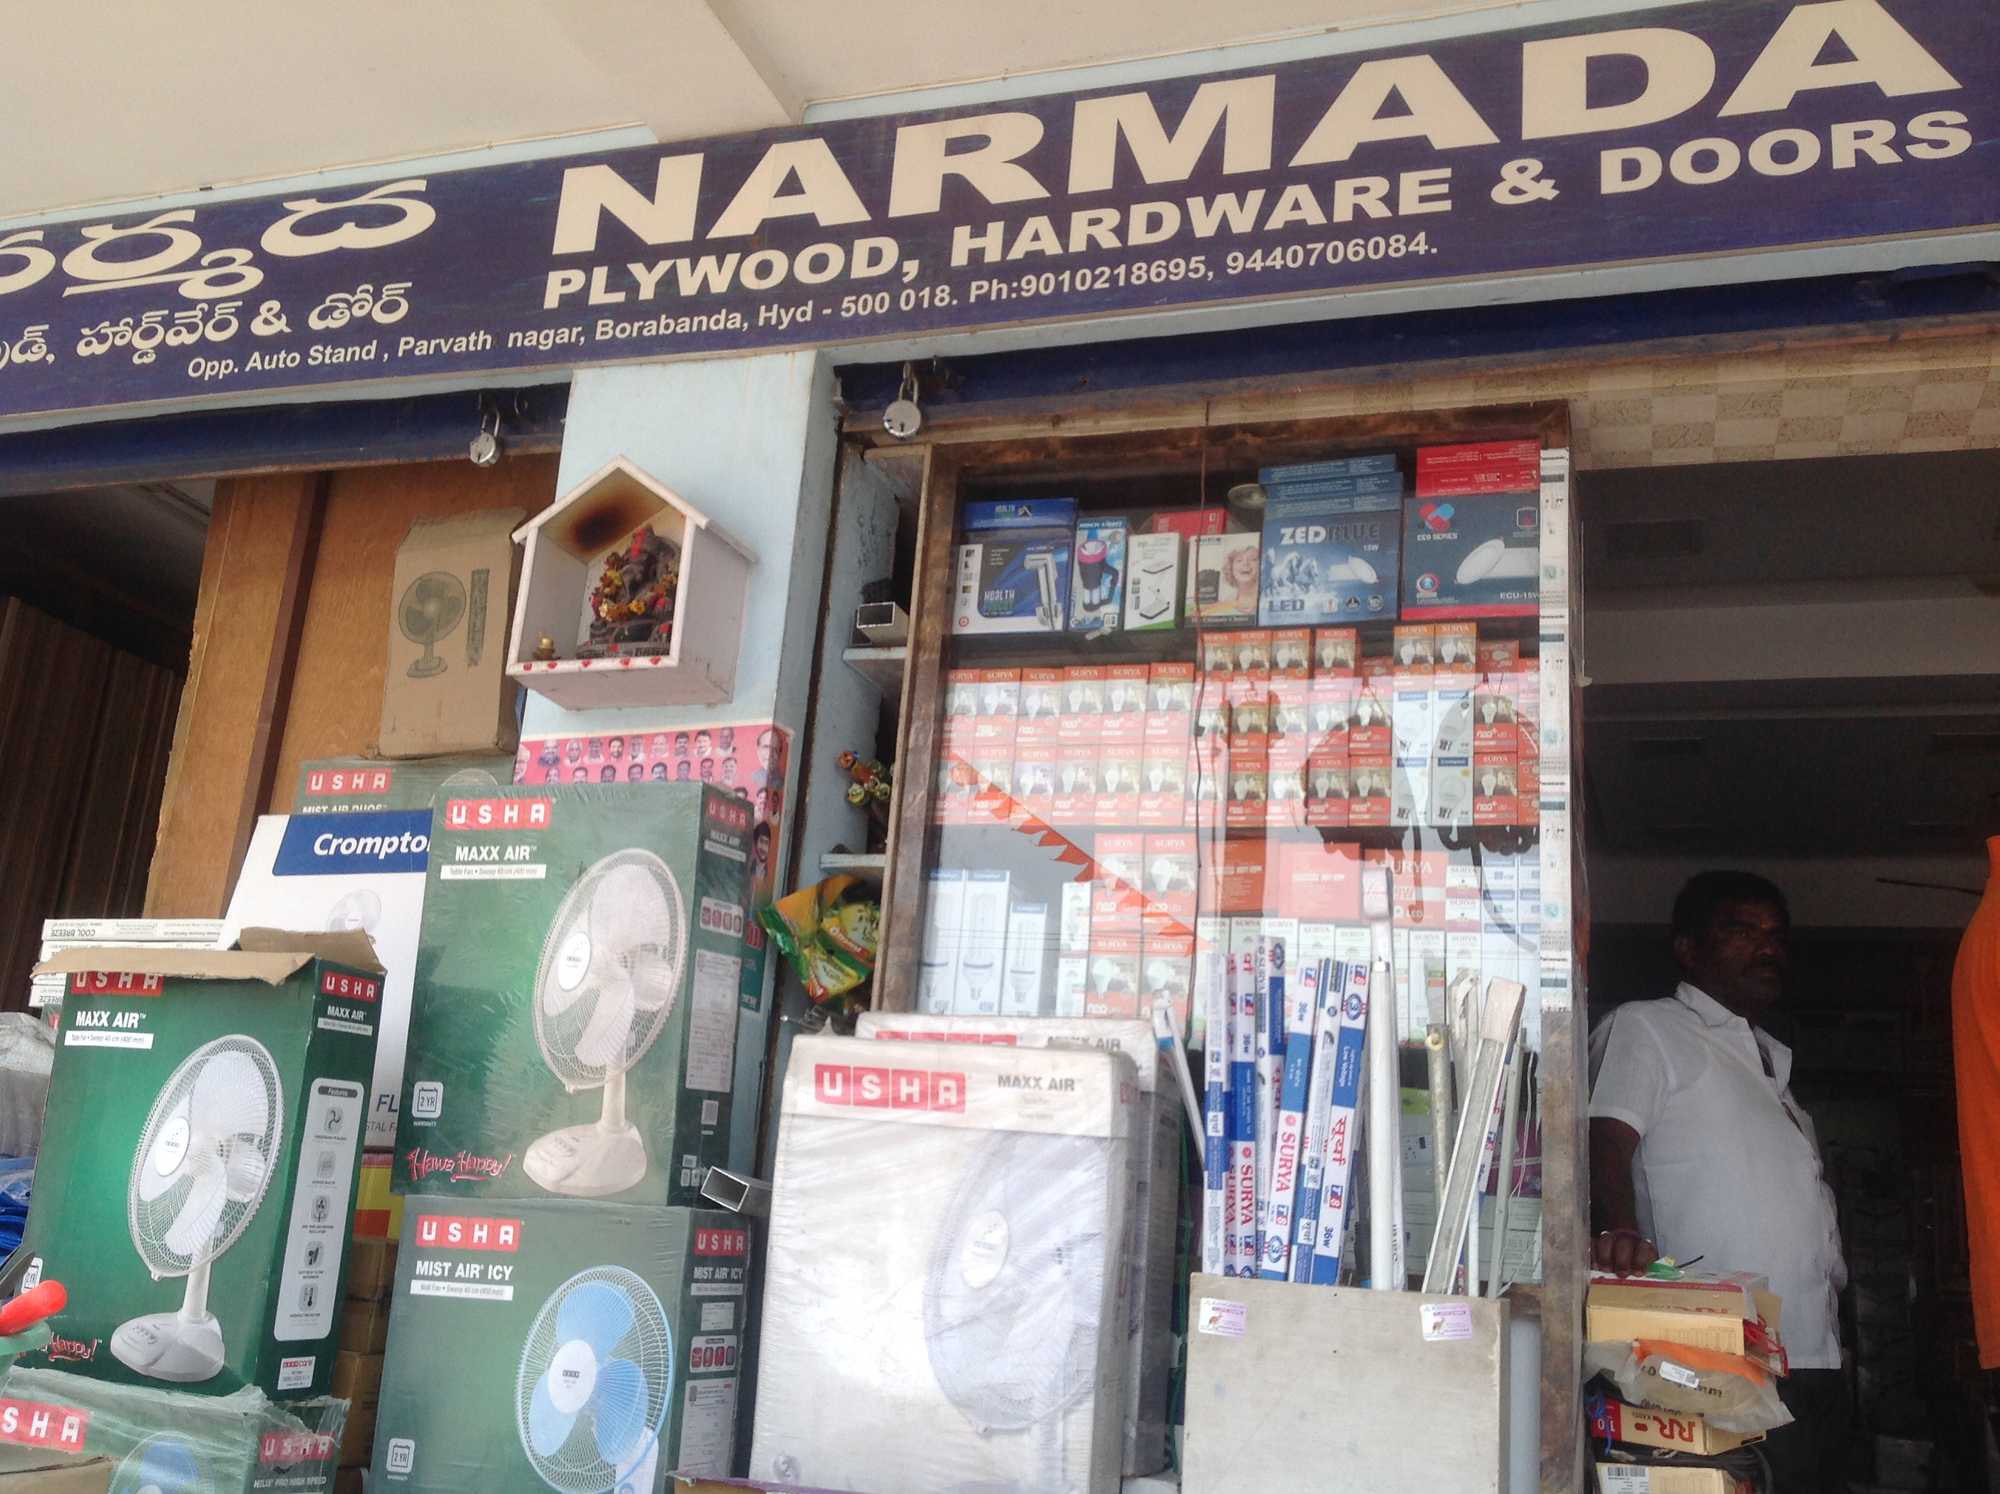 Narmada Plywood, Hardware & Doors